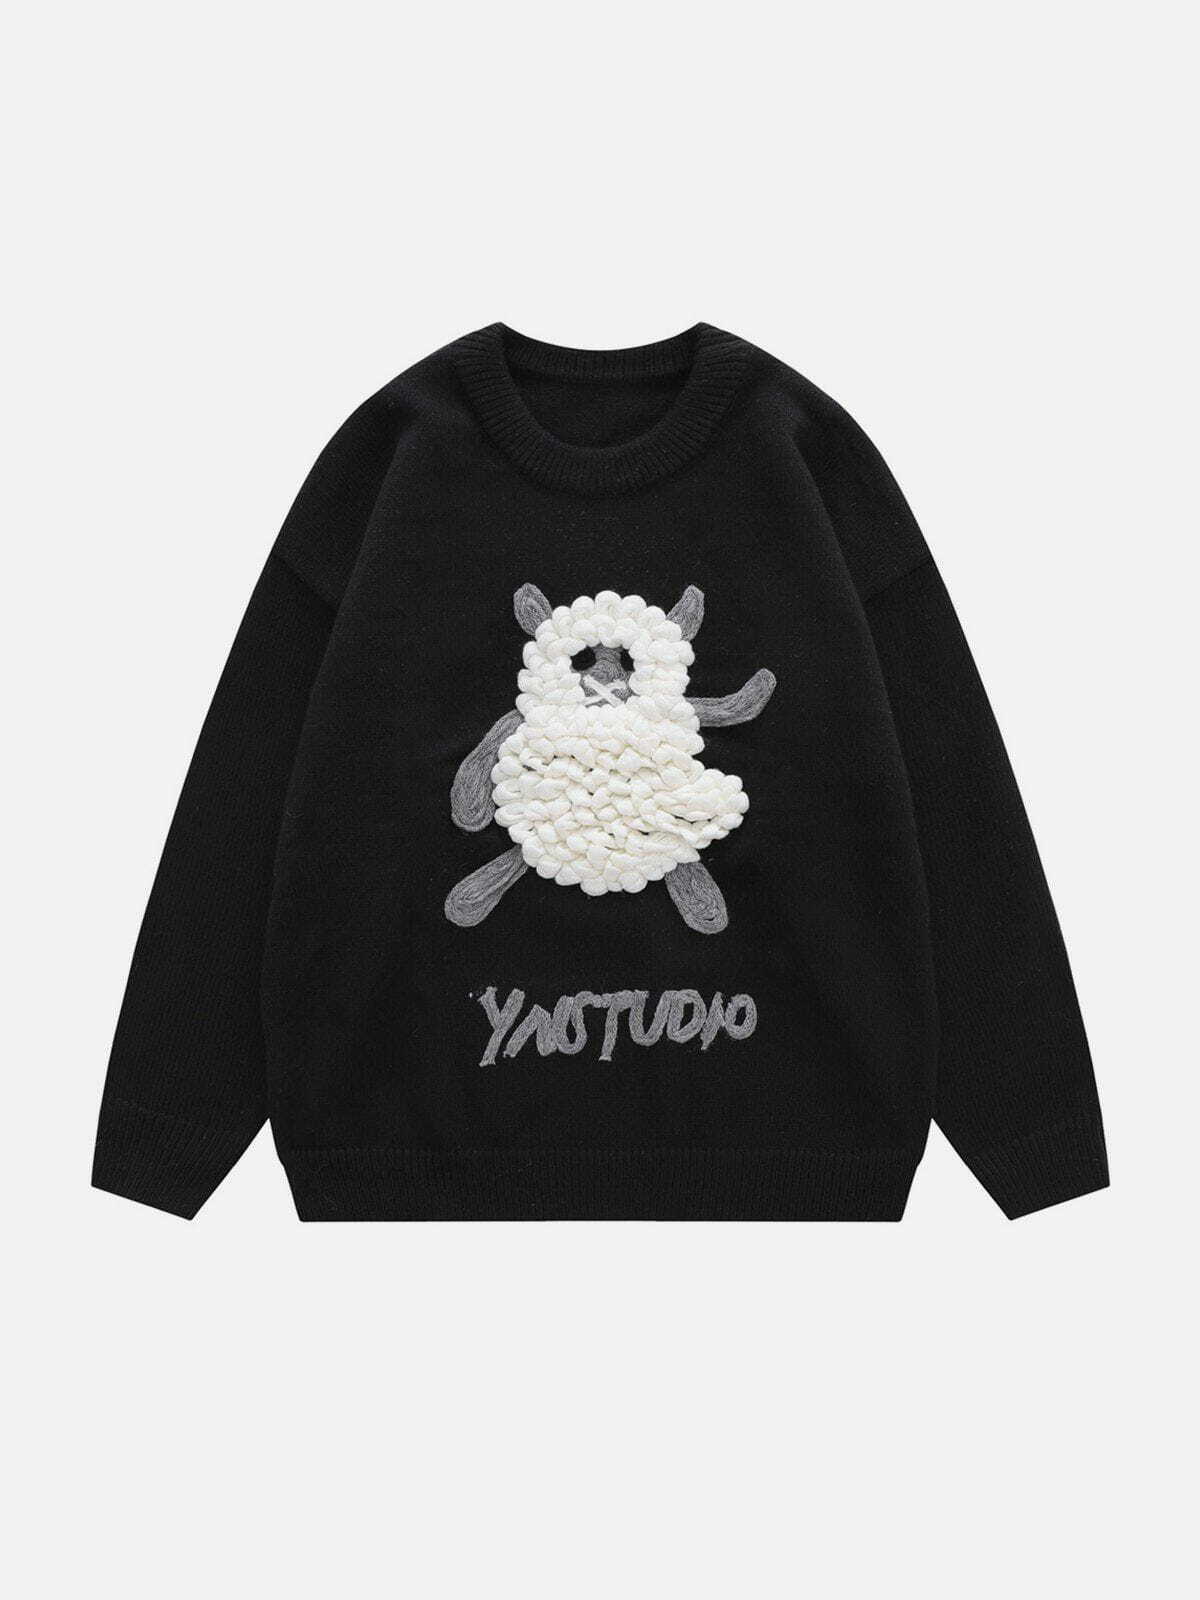 plush lamb print sweater cozy & quirky streetwear 3021